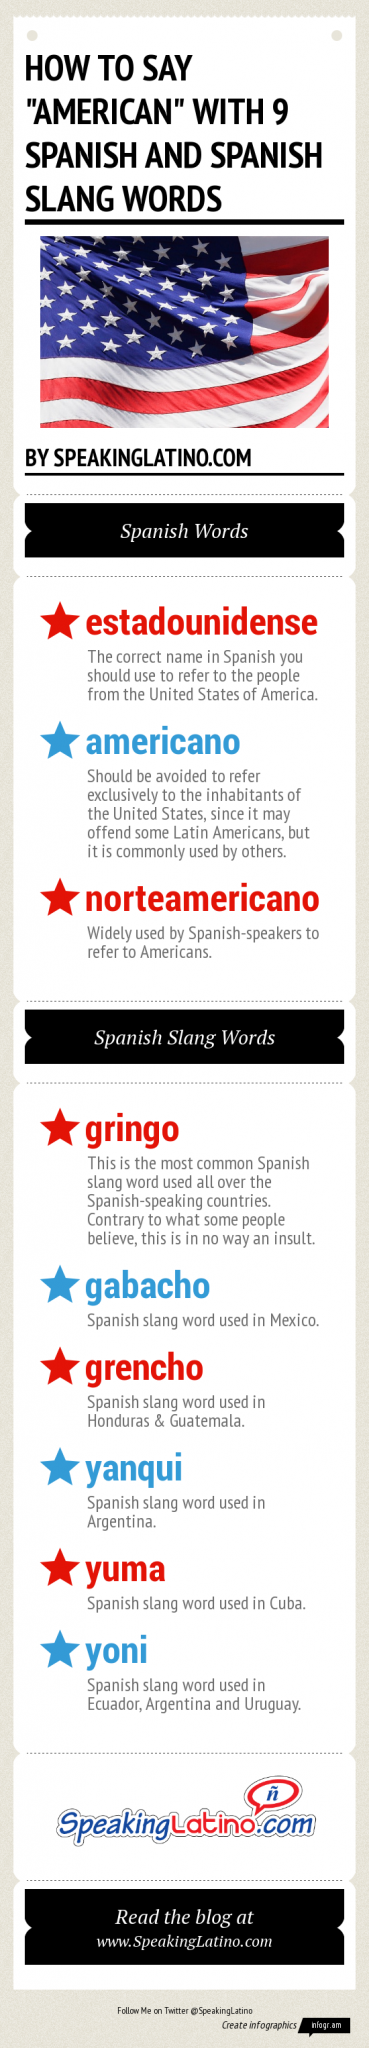 American in Spanish Slang